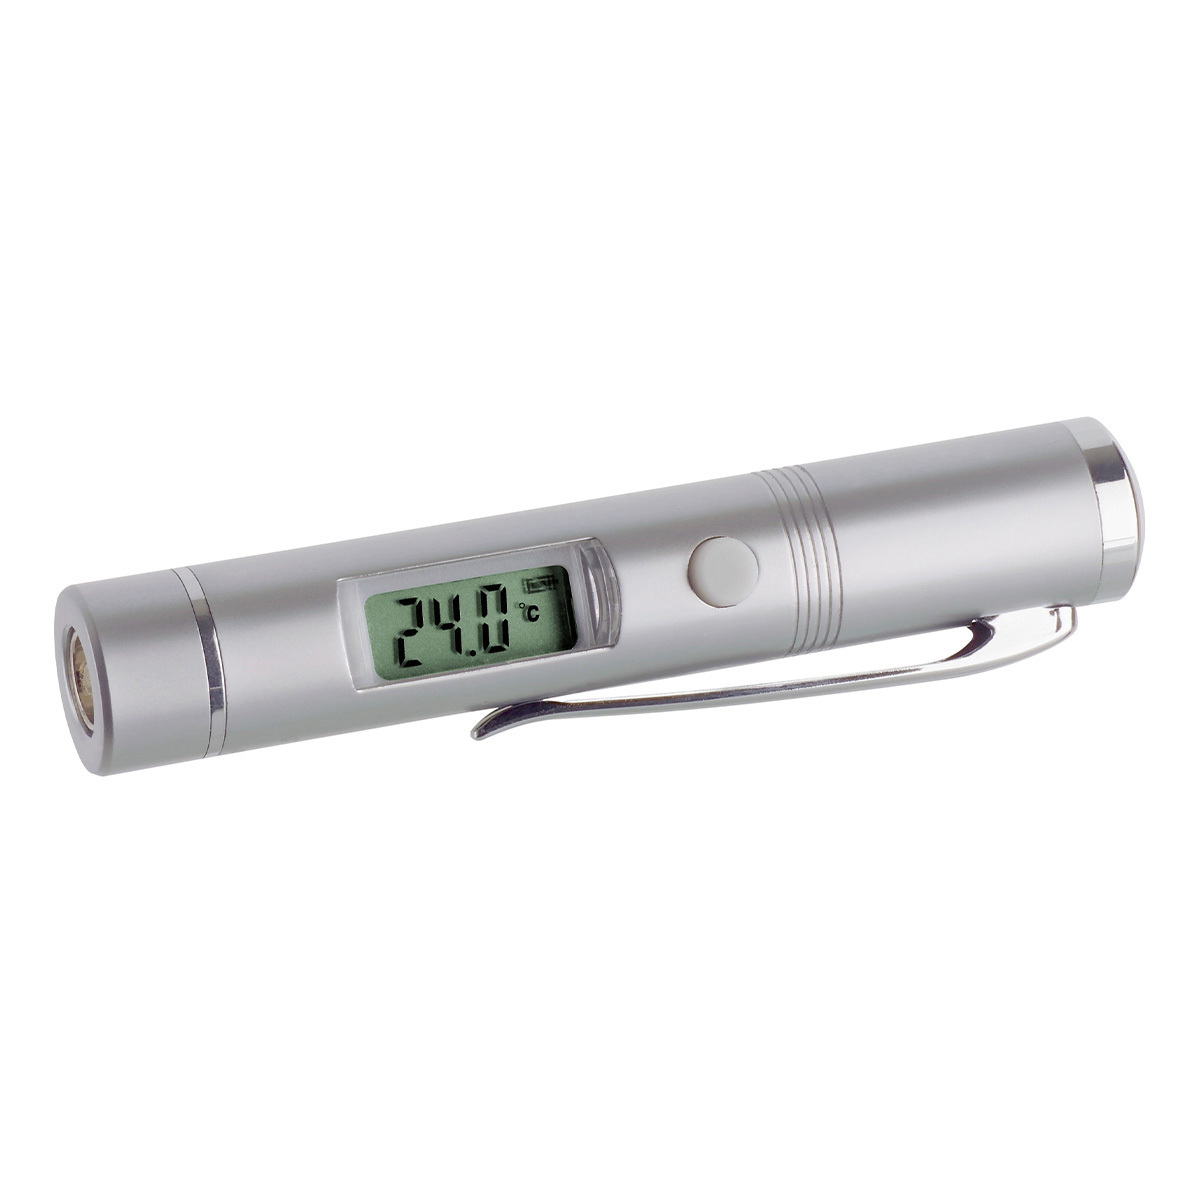 31-1125-infrarot-thermometer-flash-pen-1200x1200px.jpg